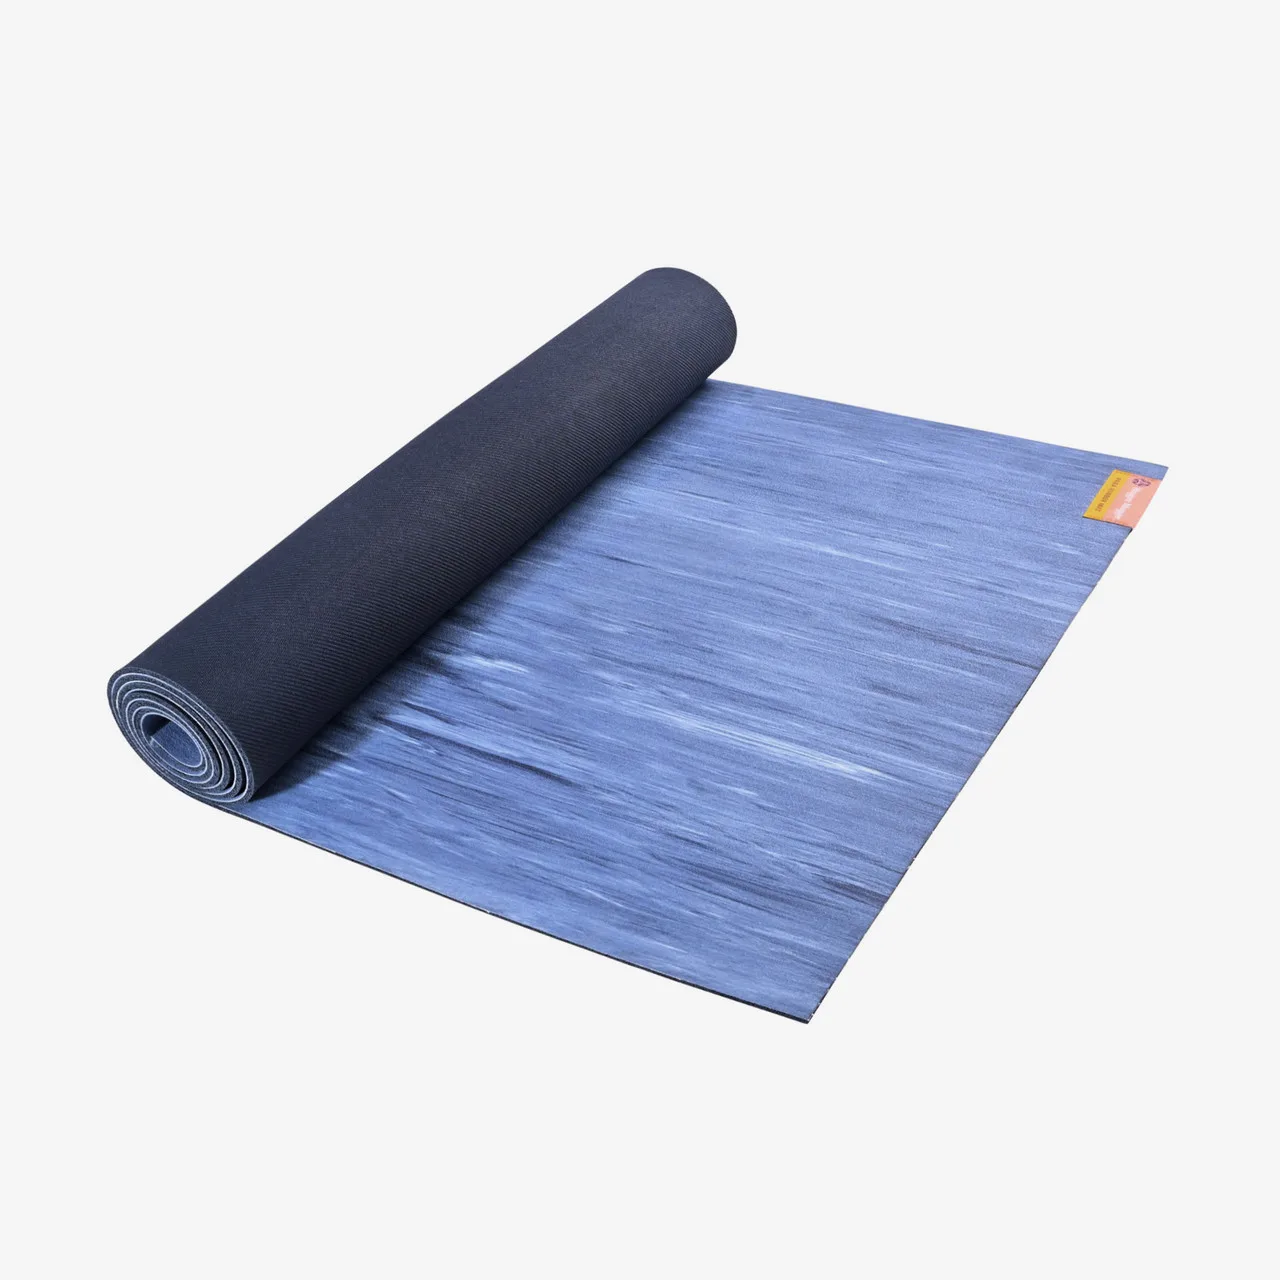 Anthropologie Travel yoga mat, full size, foldable Zambia